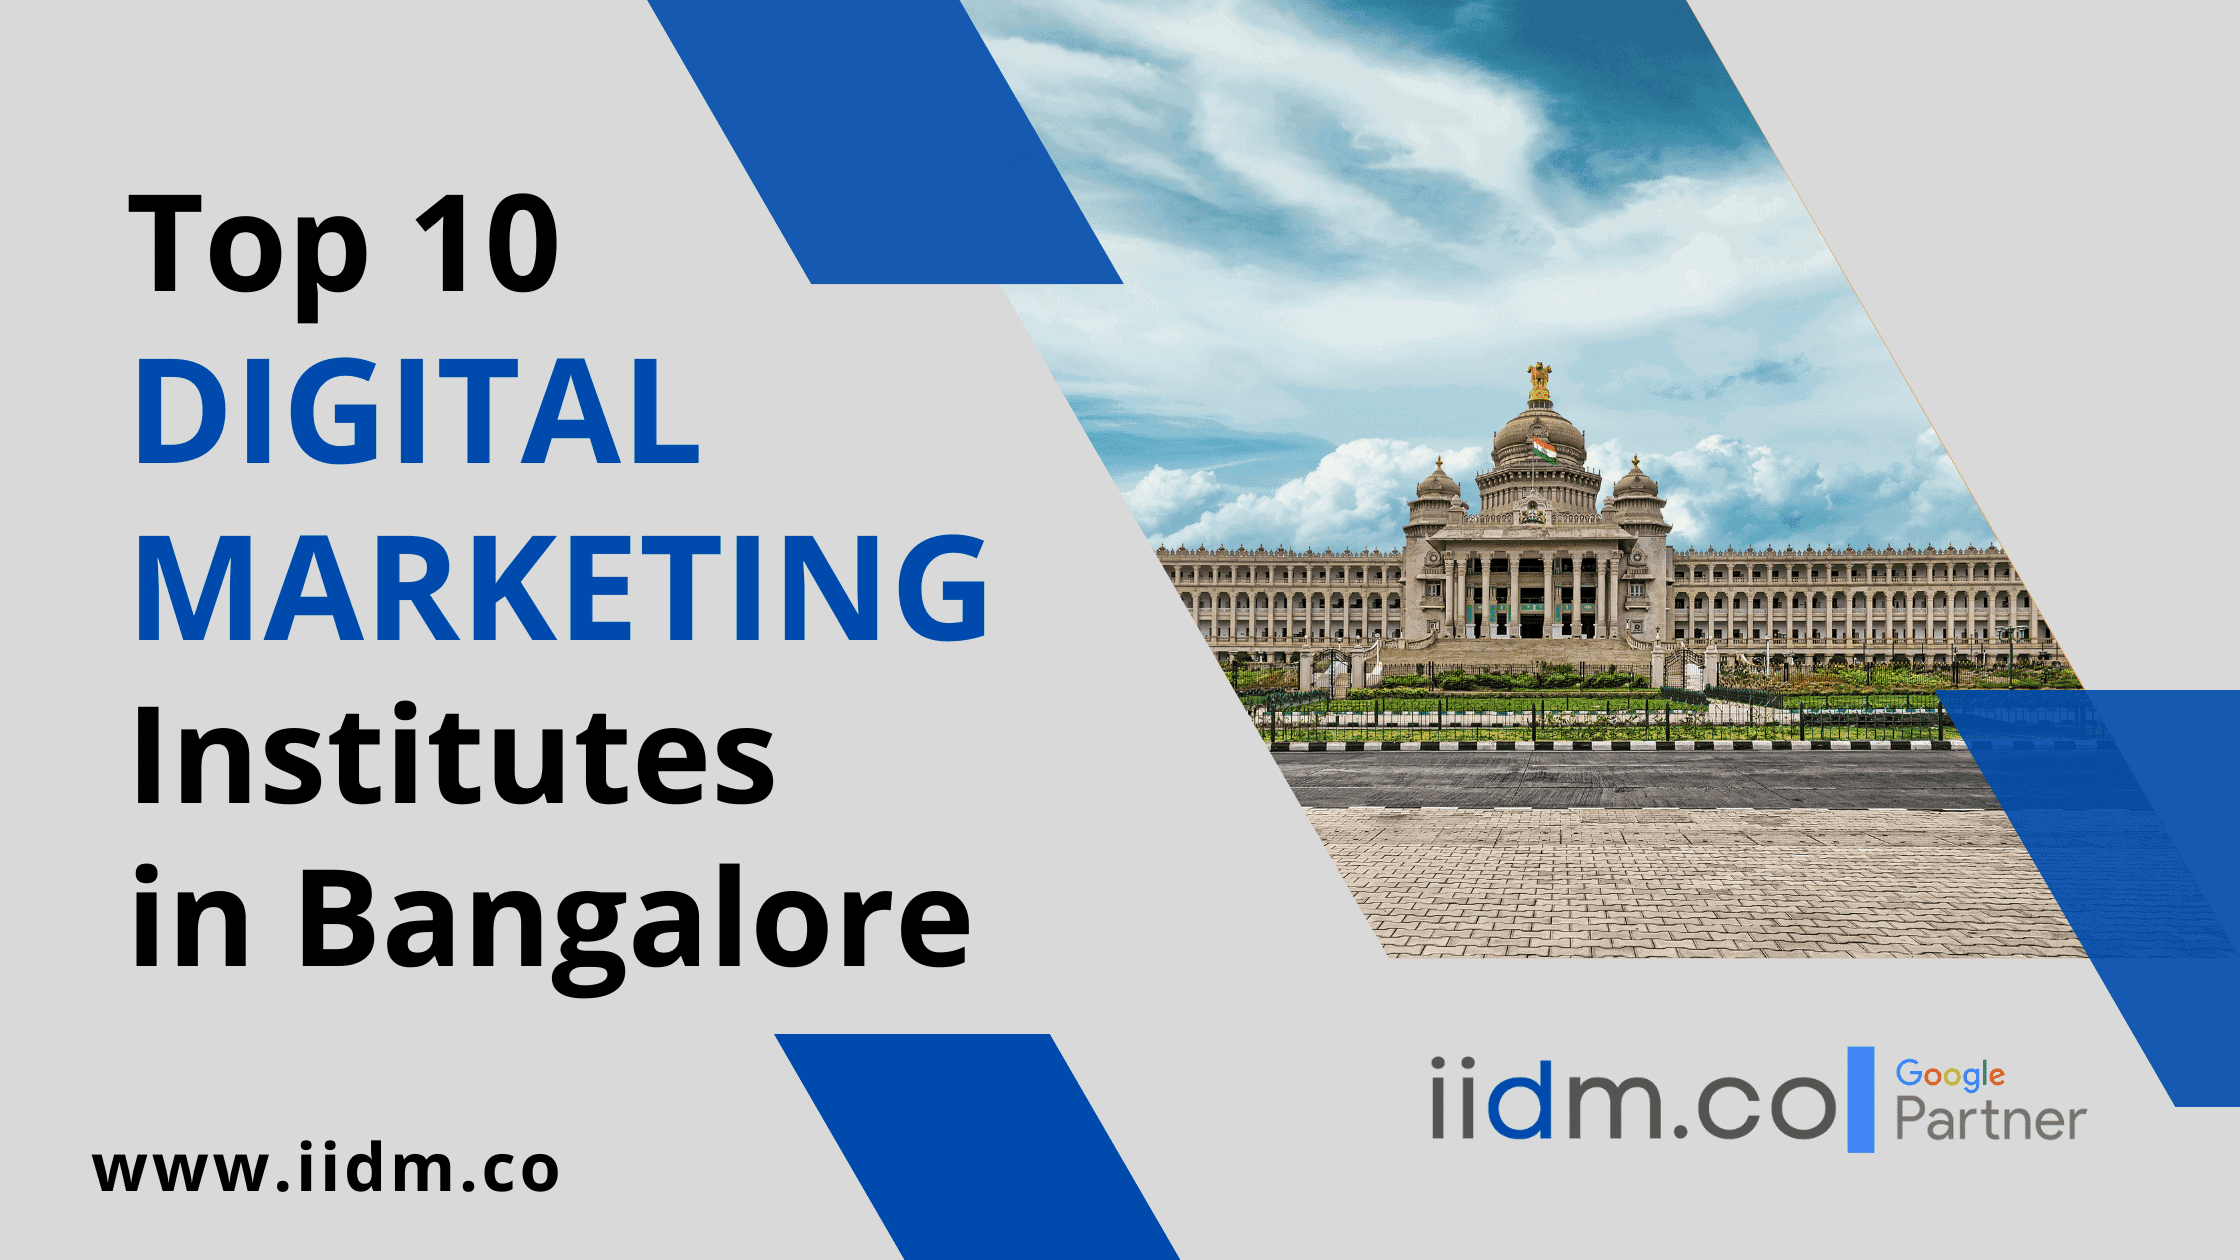 Digital marketing courses in bangalore